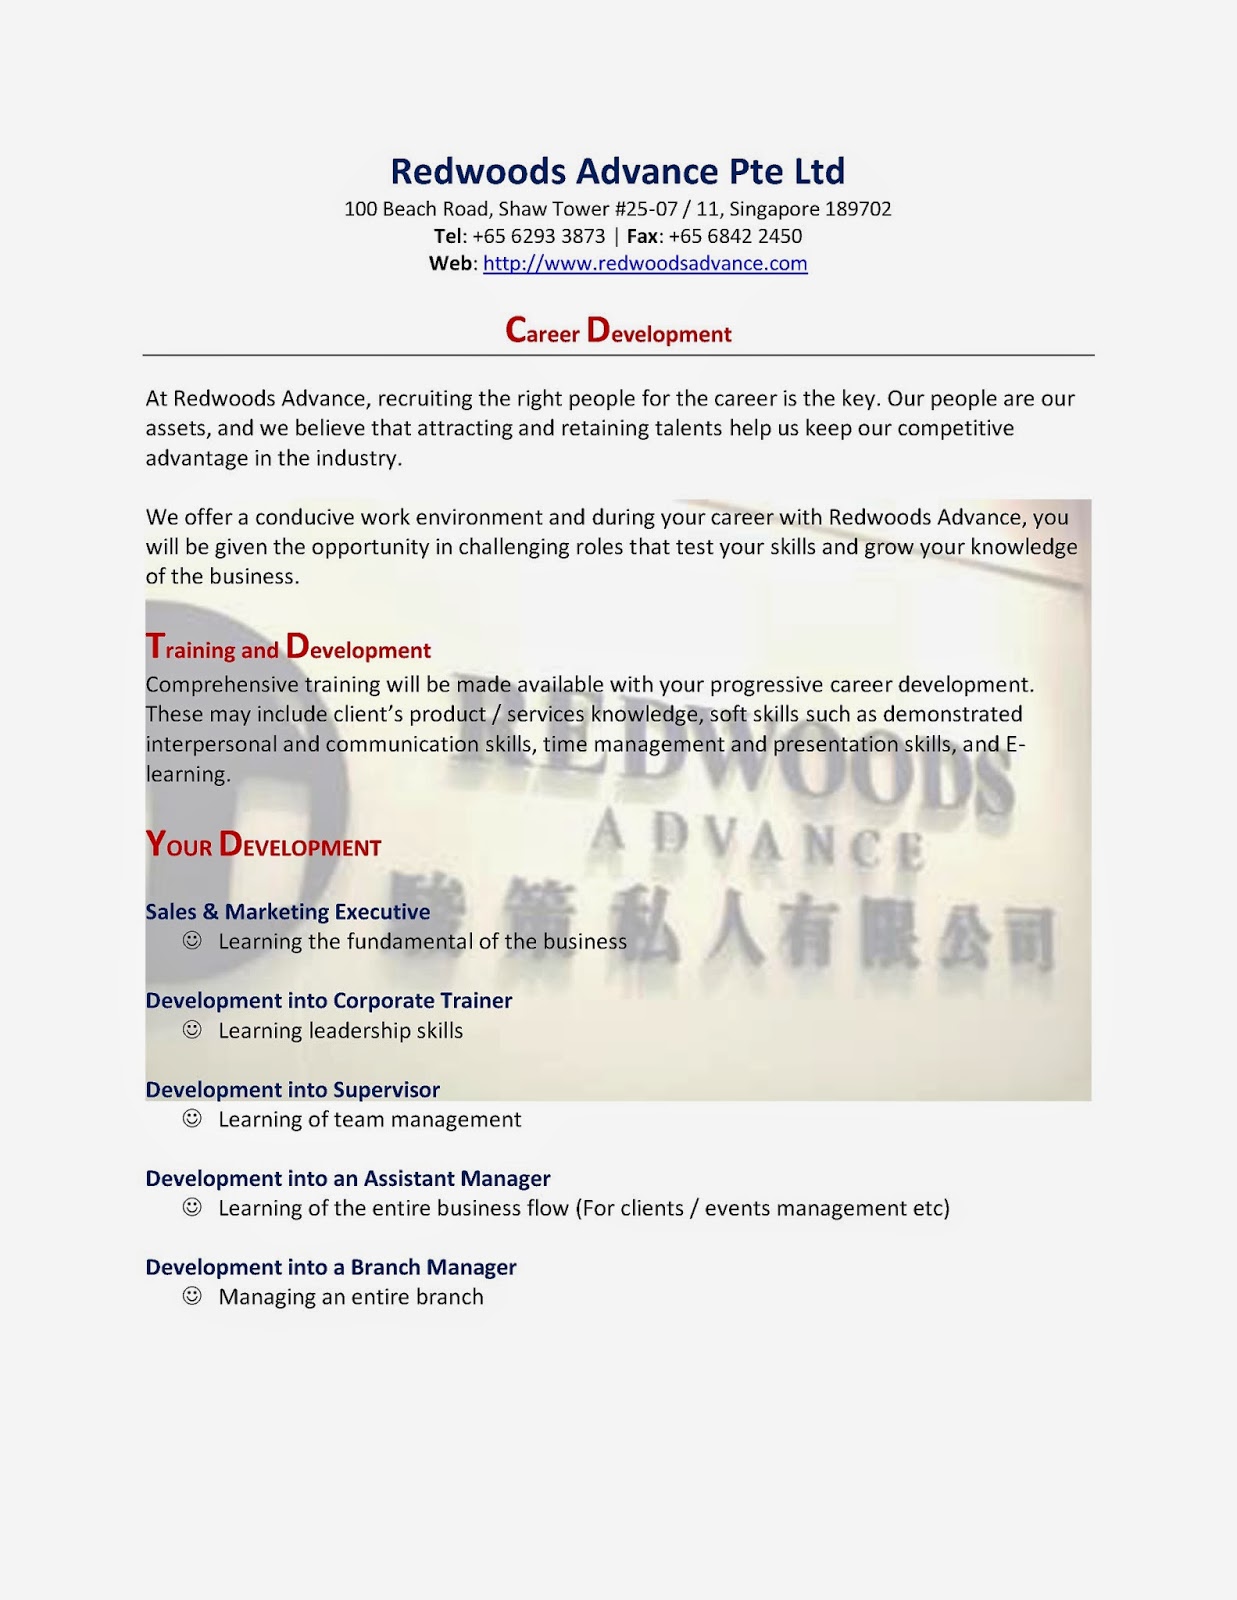 Redwoods Advance - Career Development Programme